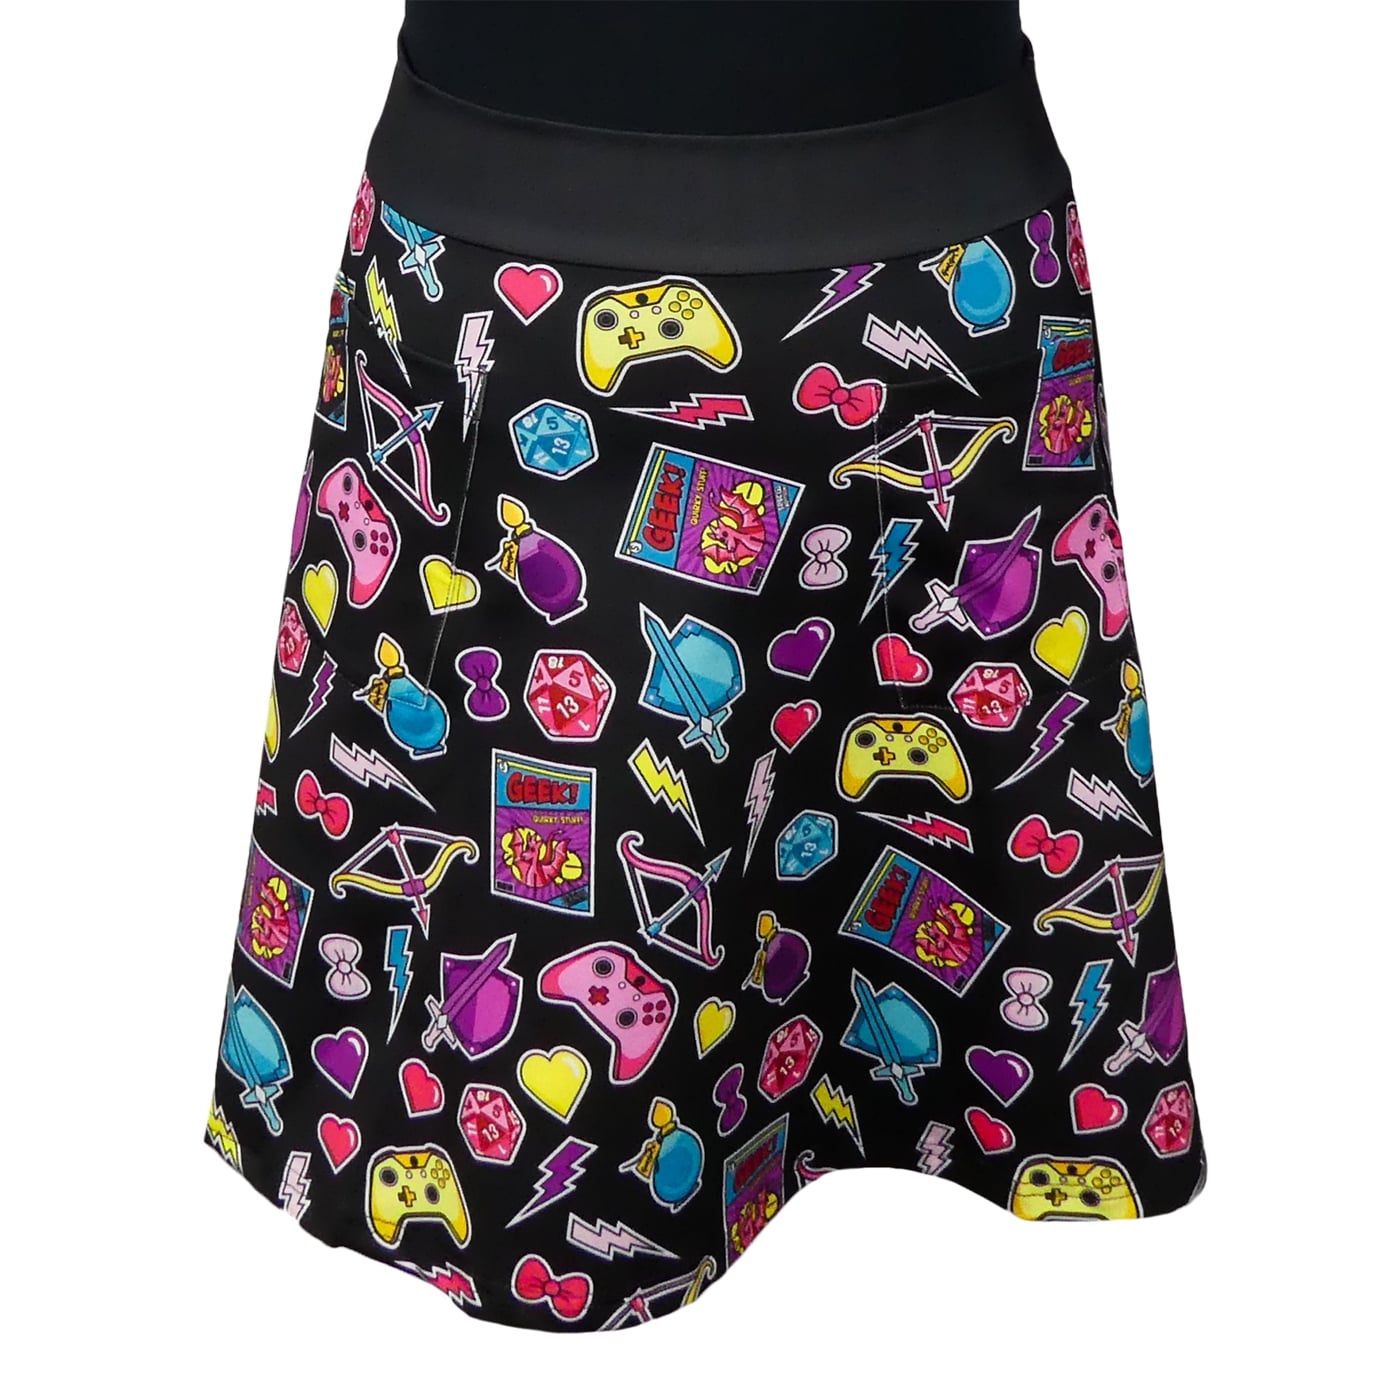 Geek Girl Short Skirt by RainbowsAndFairies.com (Gaming - Dungeons Dragons - Comic Book - Aline Skirt With Pockets - Cute - Flirty - Vintage Inspired - Rock & Roll) - SKU: CL_SHORT_GEEKG_ORG - Pic 01